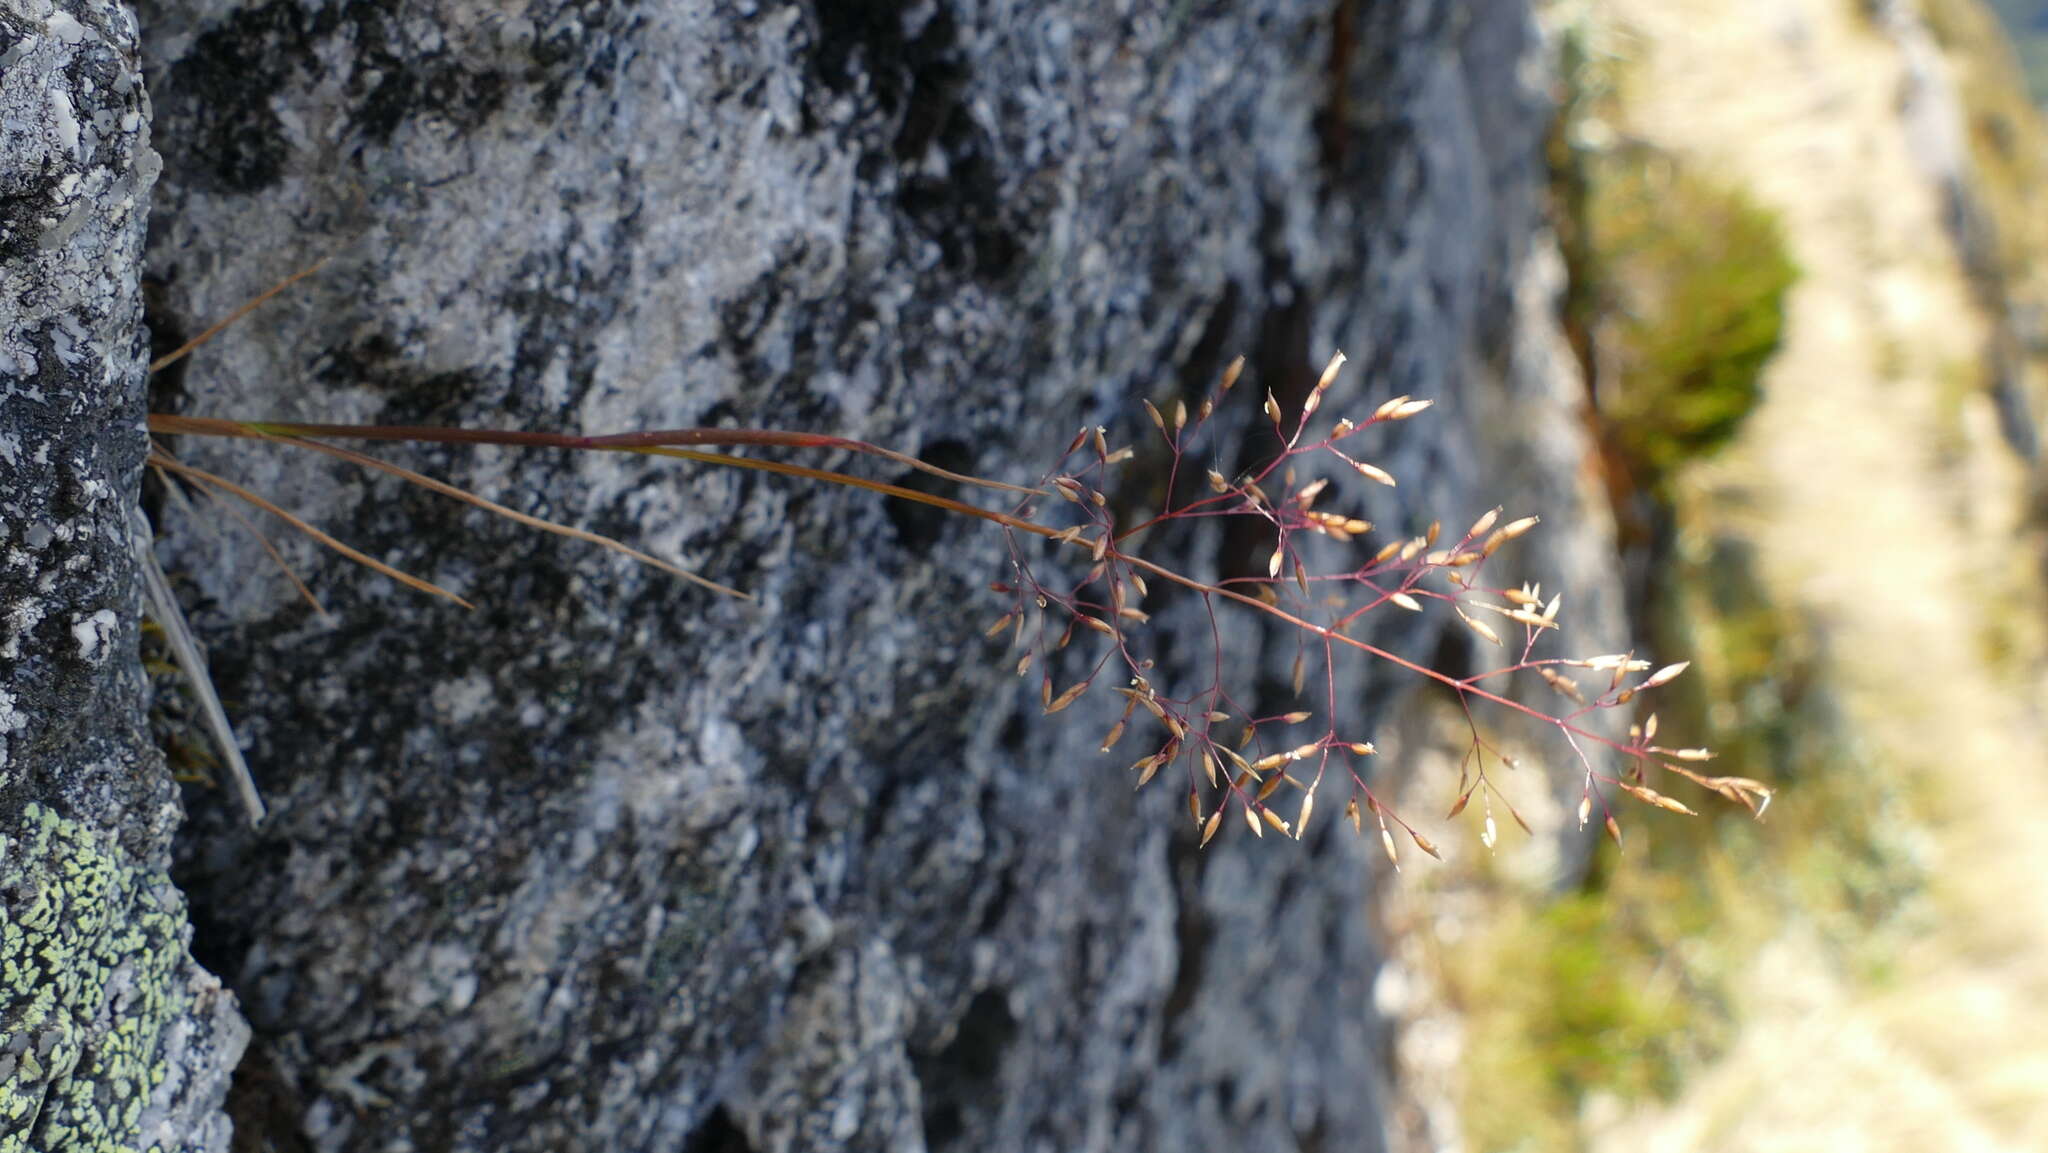 Image of Agrostis dyeri Petrie